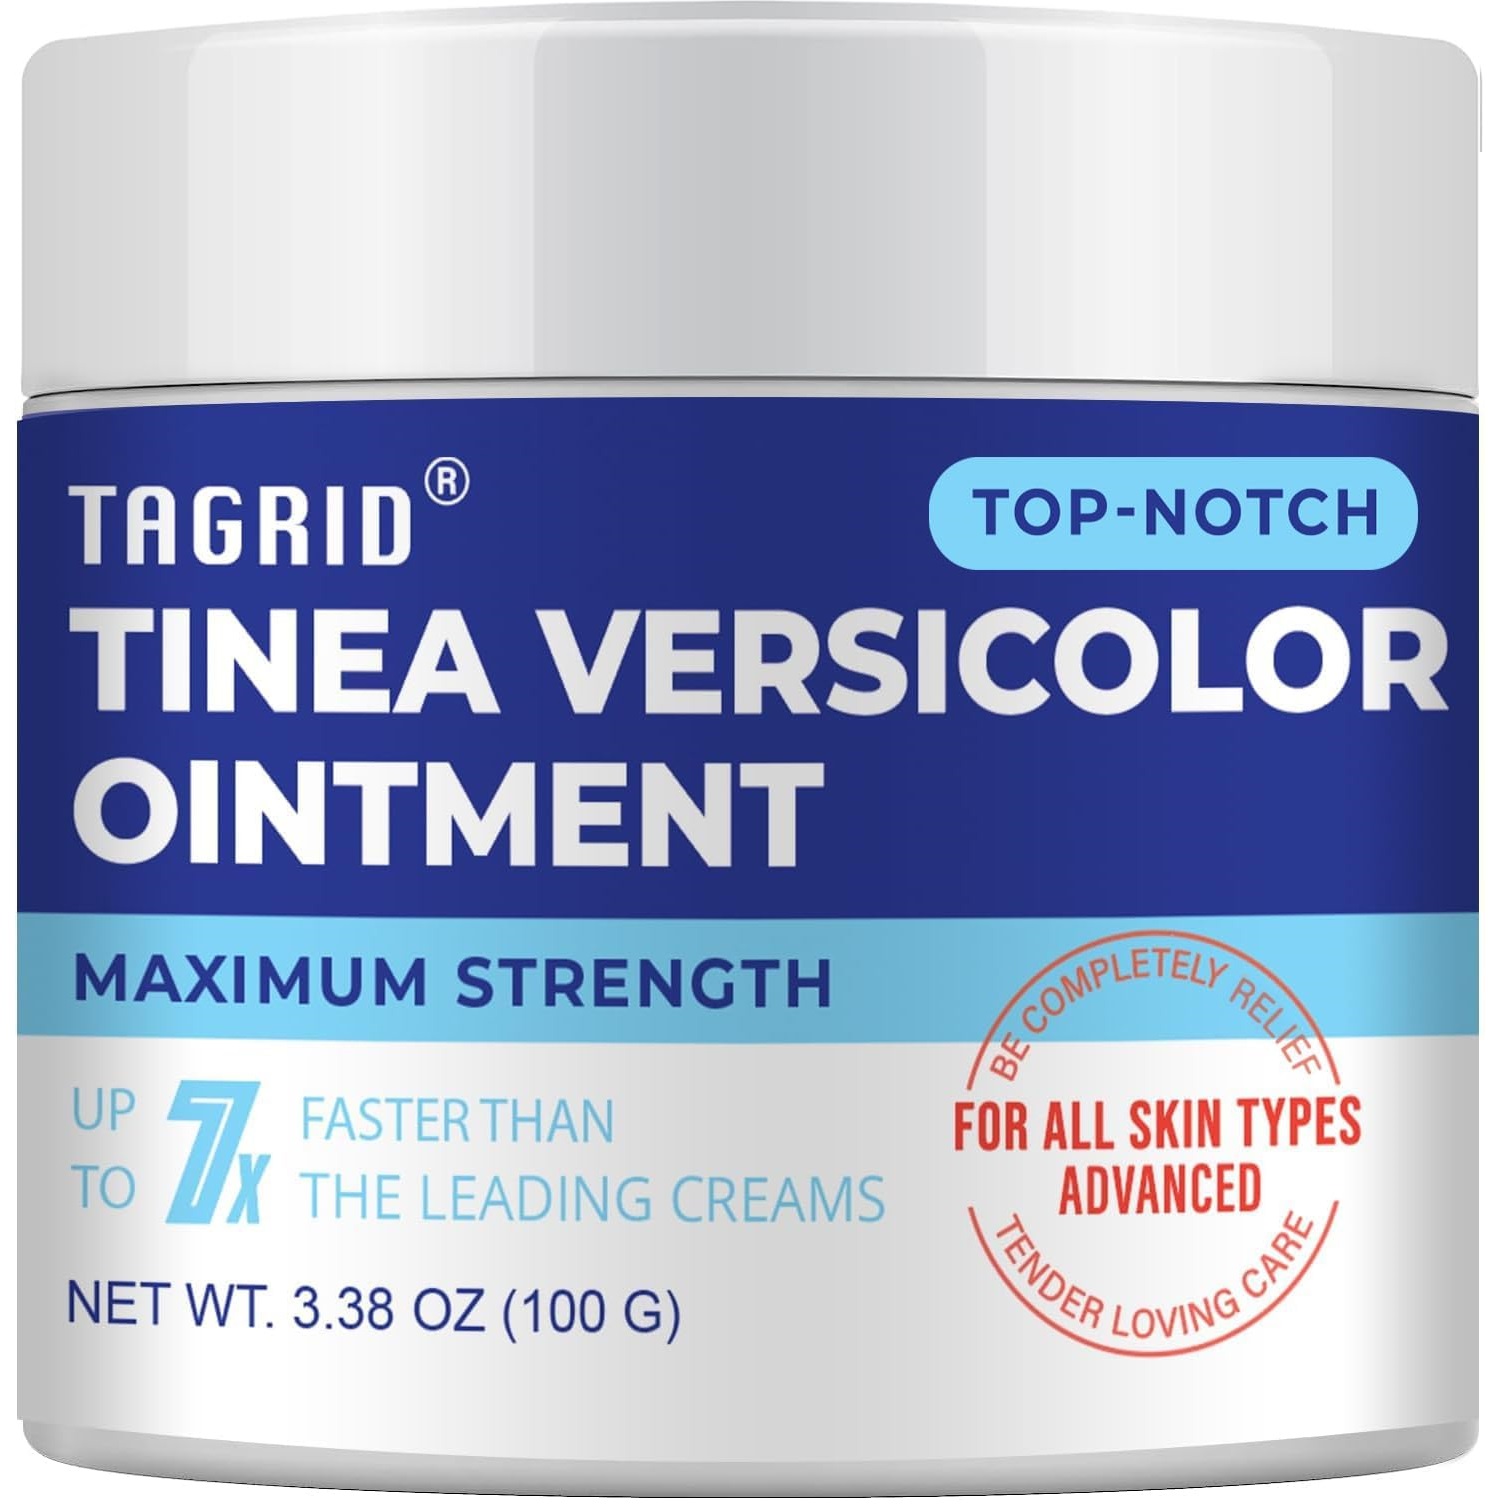 TAGRID-Top-Notch-Tinea-Versicolor-Treatment